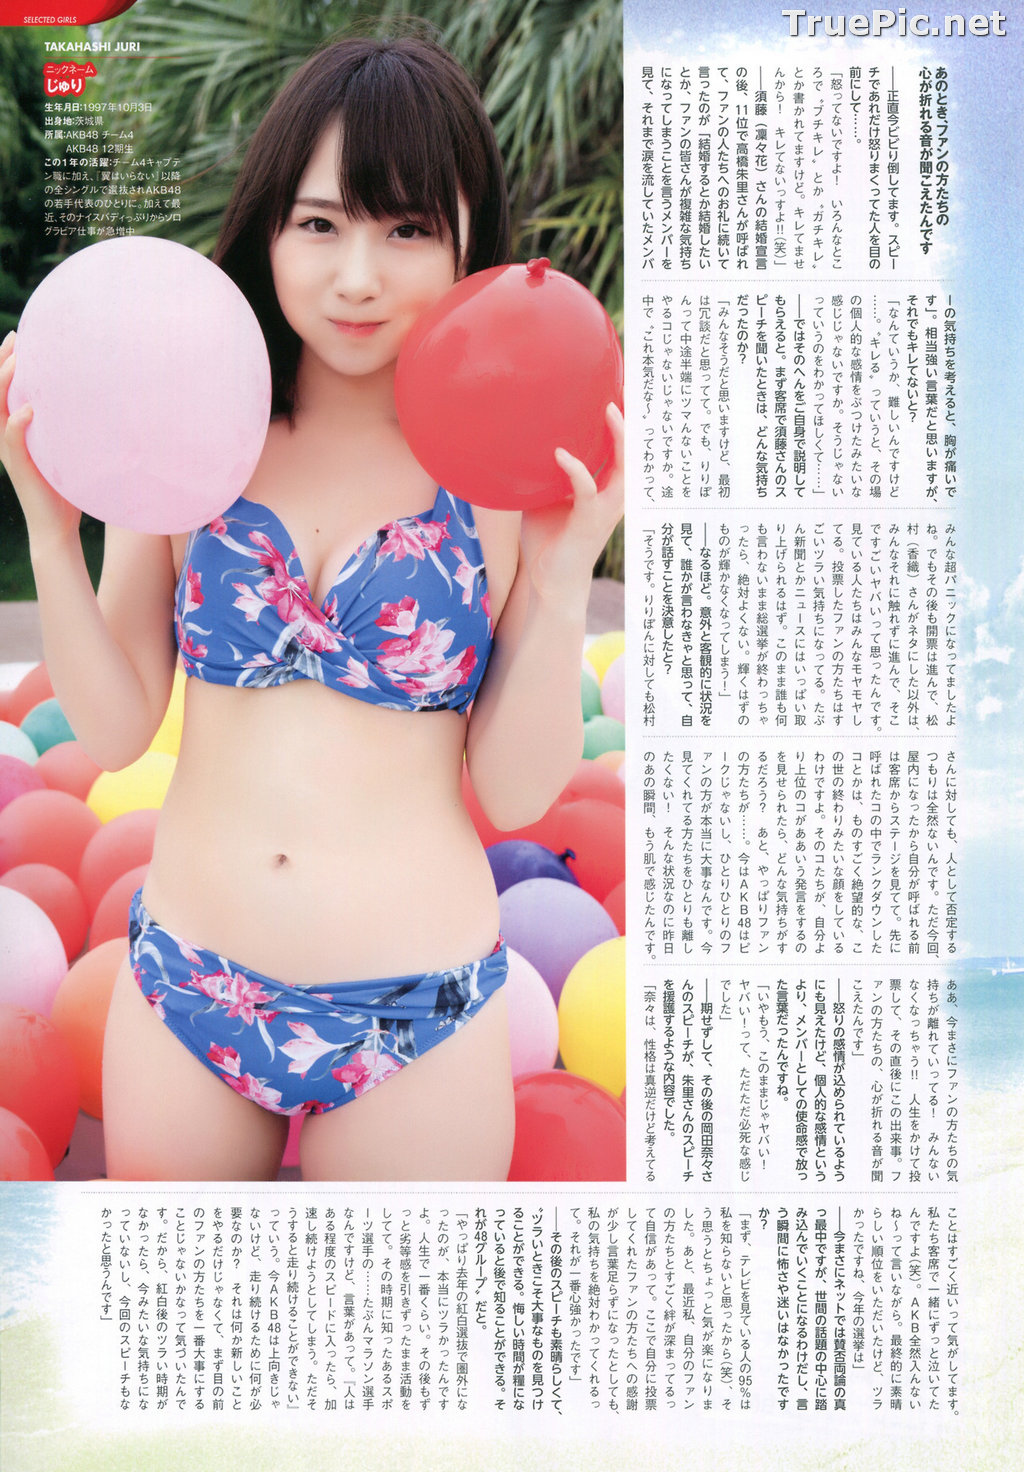 Image AKB48 General Election! Swimsuit Surprise Announcement 2017 - TruePic.net - Picture-3